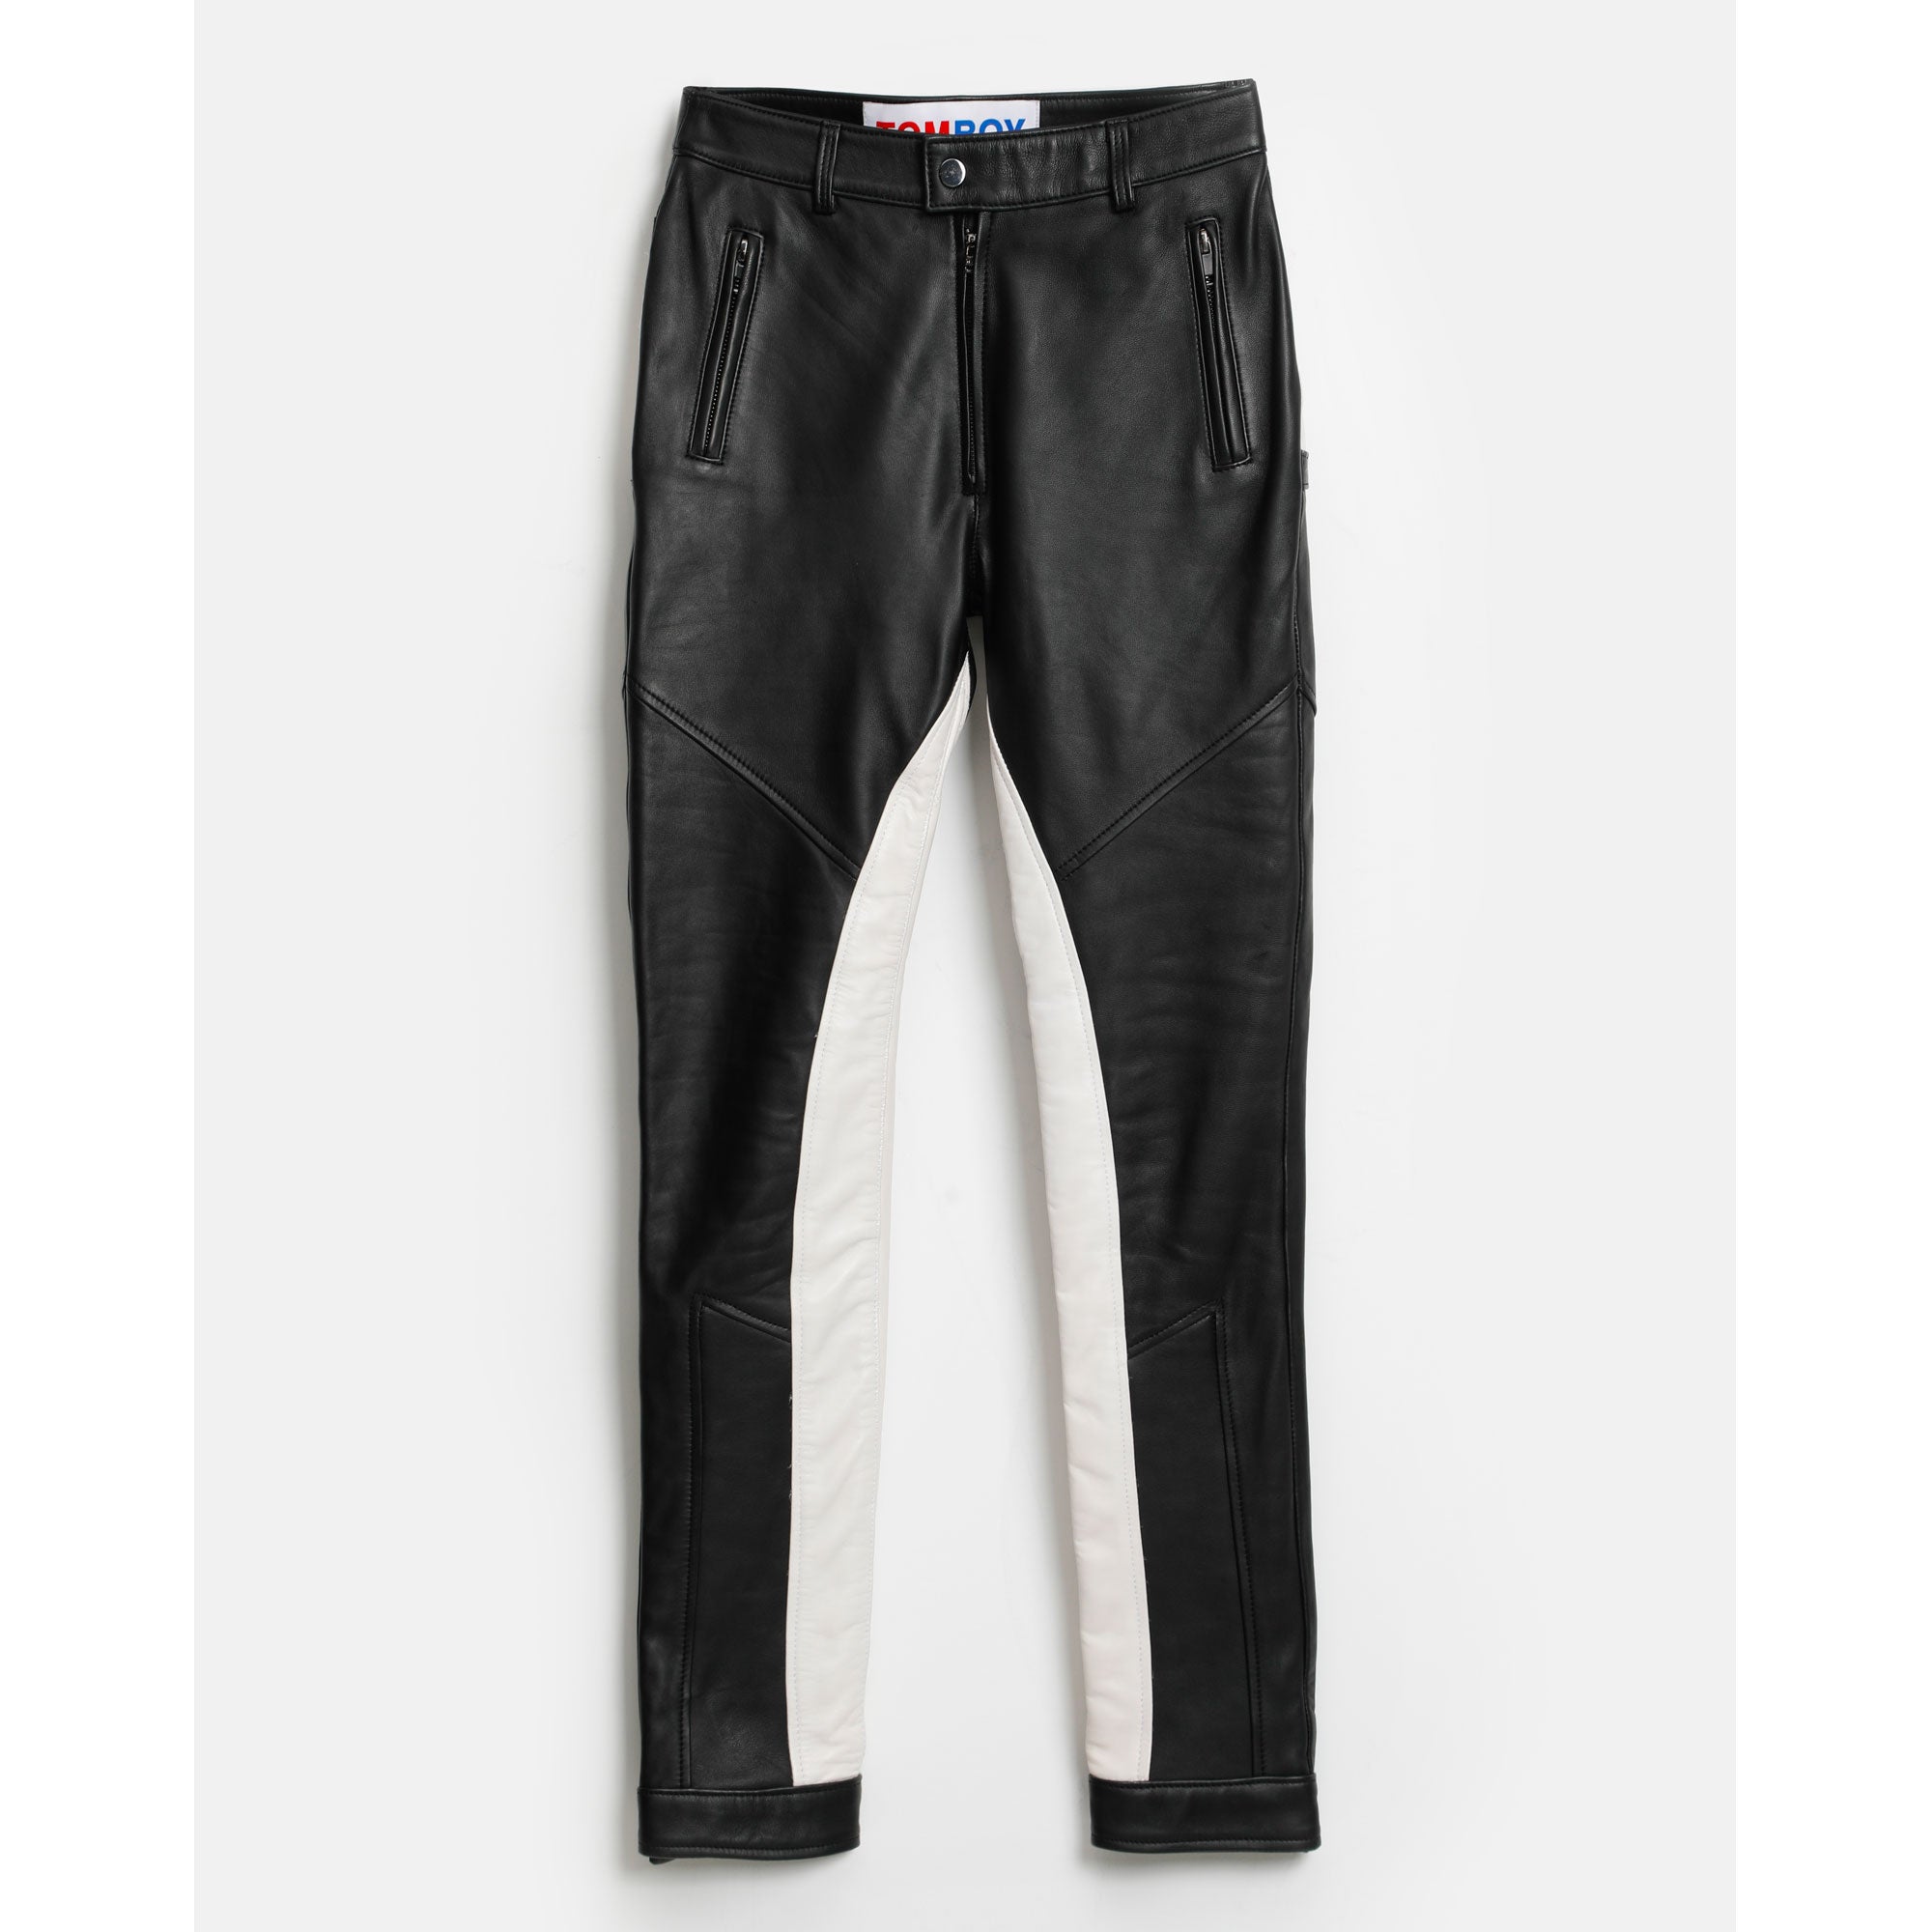 Straight pants Studio Tomboy Blue size 28 FR in Denim - Jeans - 29547254